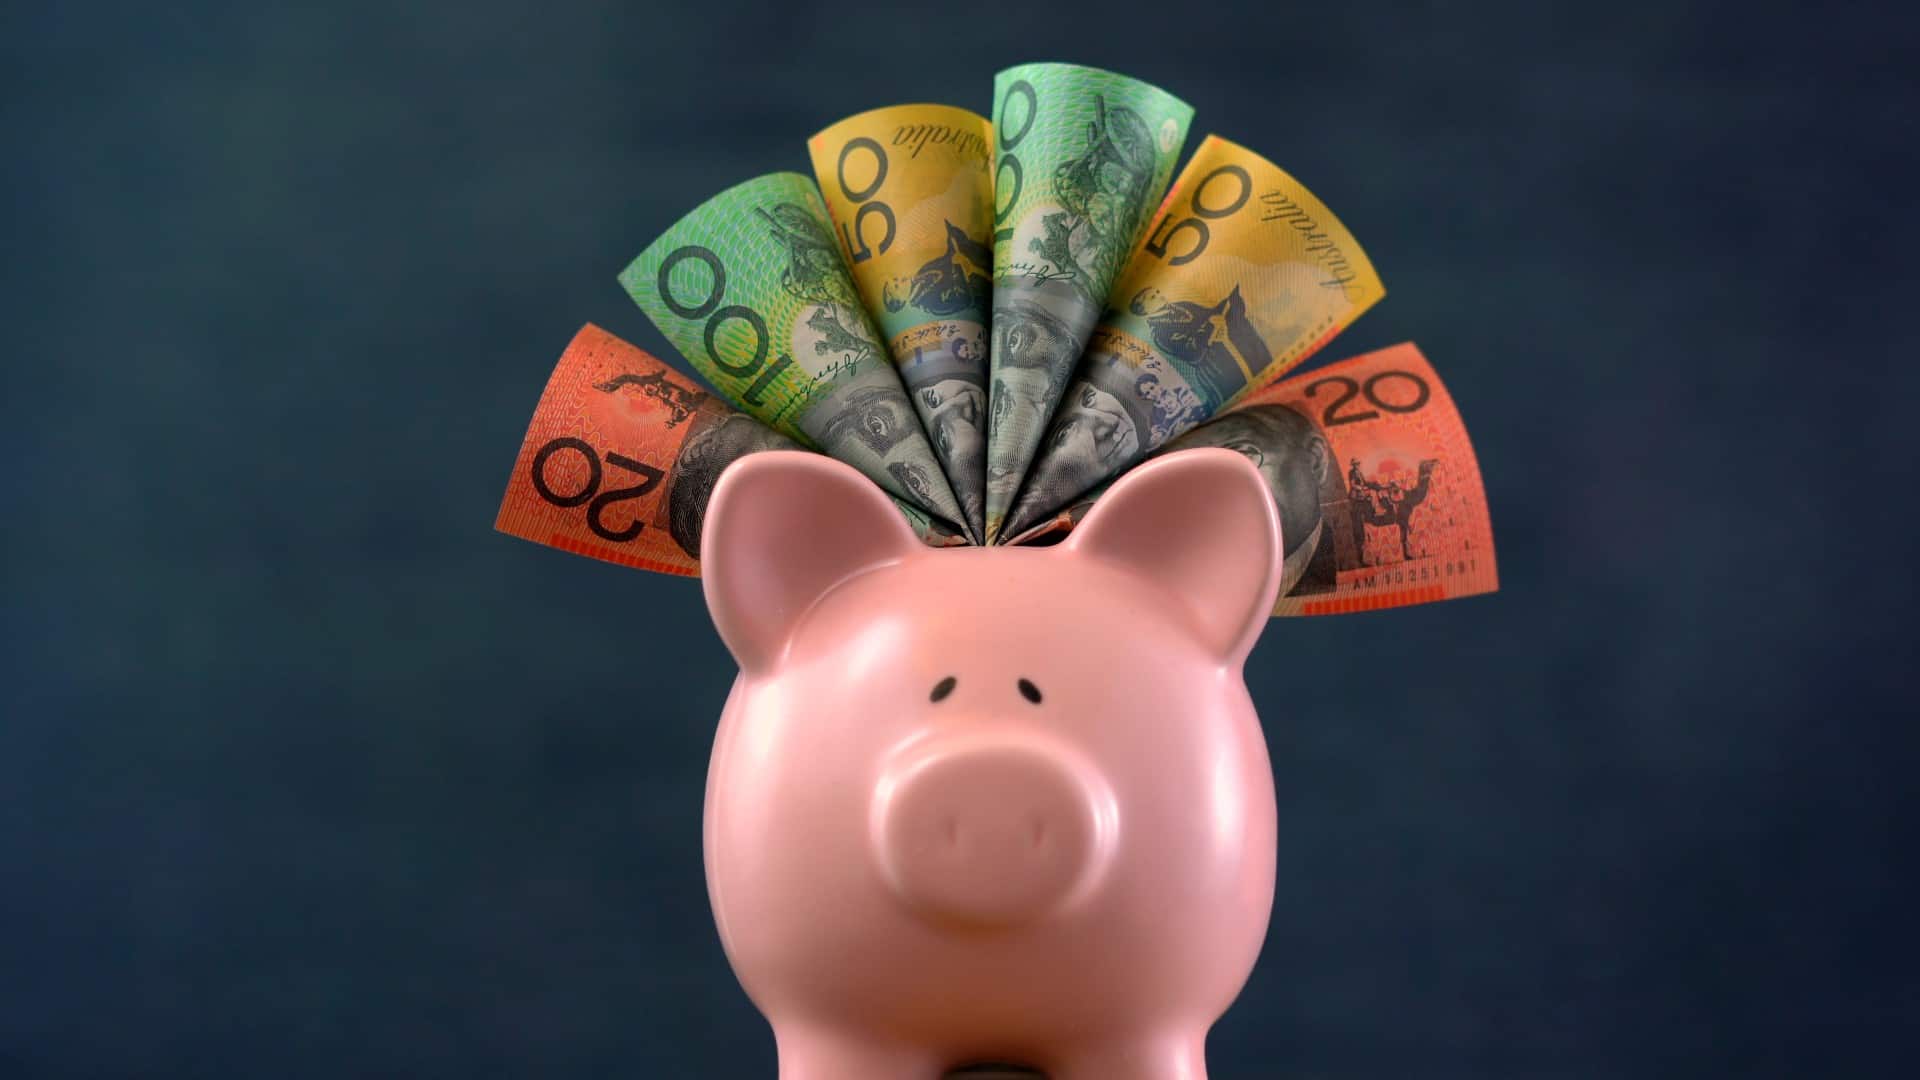 Australian dollar notes around a piggy bank.